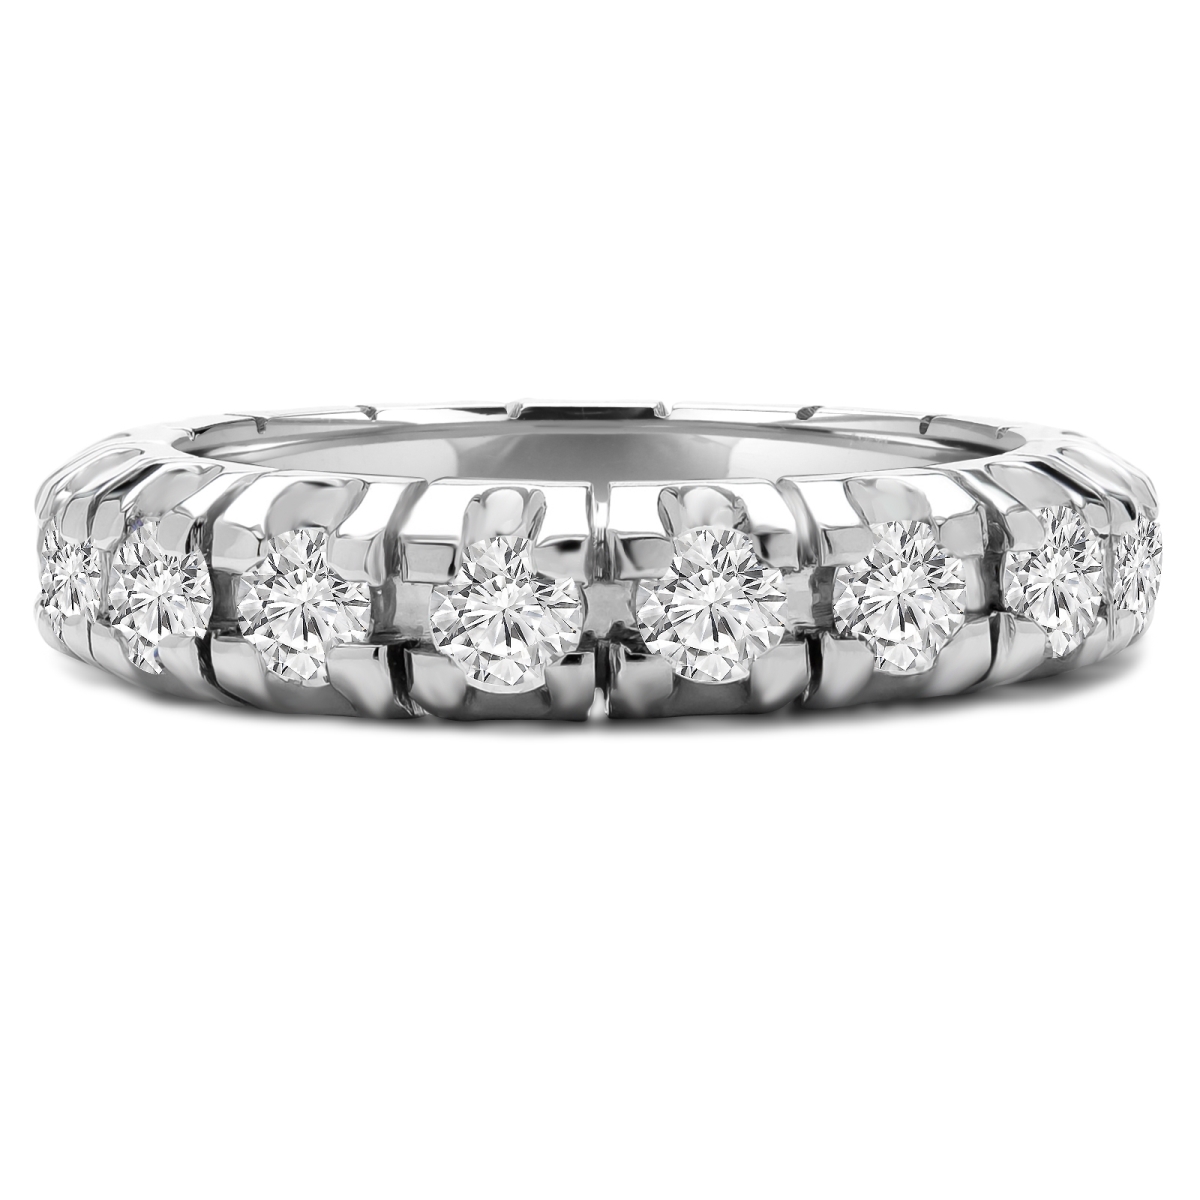 Great Gems 3.33 CTW Round Diamond Full-Eternity Anniversary Wedding Band Ring in 18K White Gold - Size 7.5